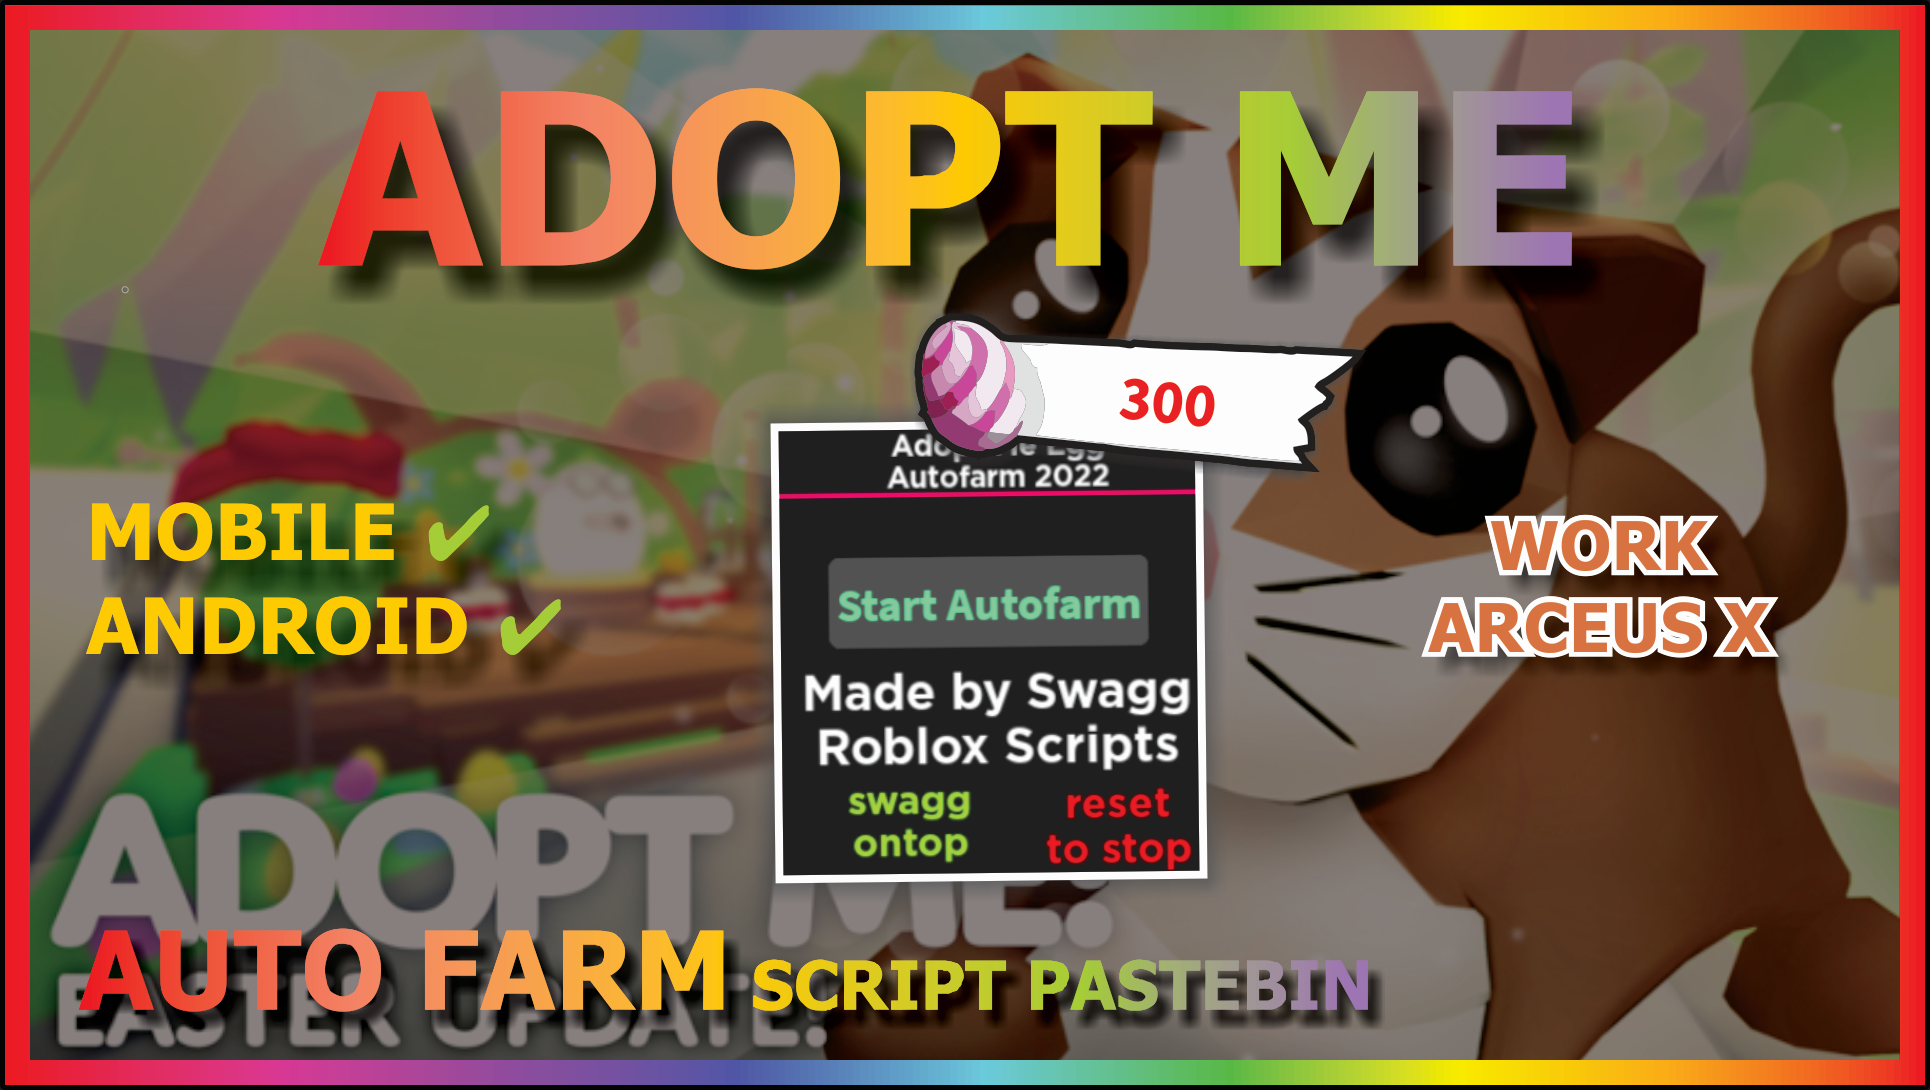 ADOPT ME – ScriptPastebin